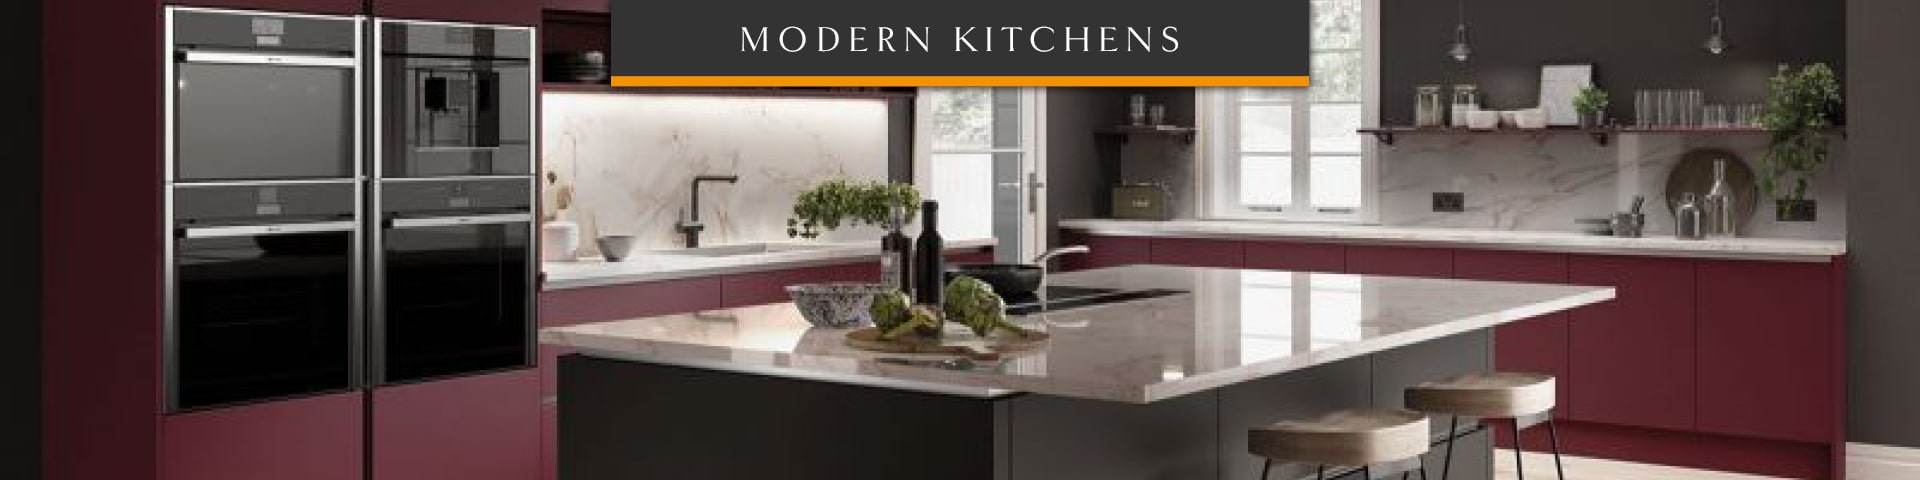 Modern Kitchens Lanarkshire